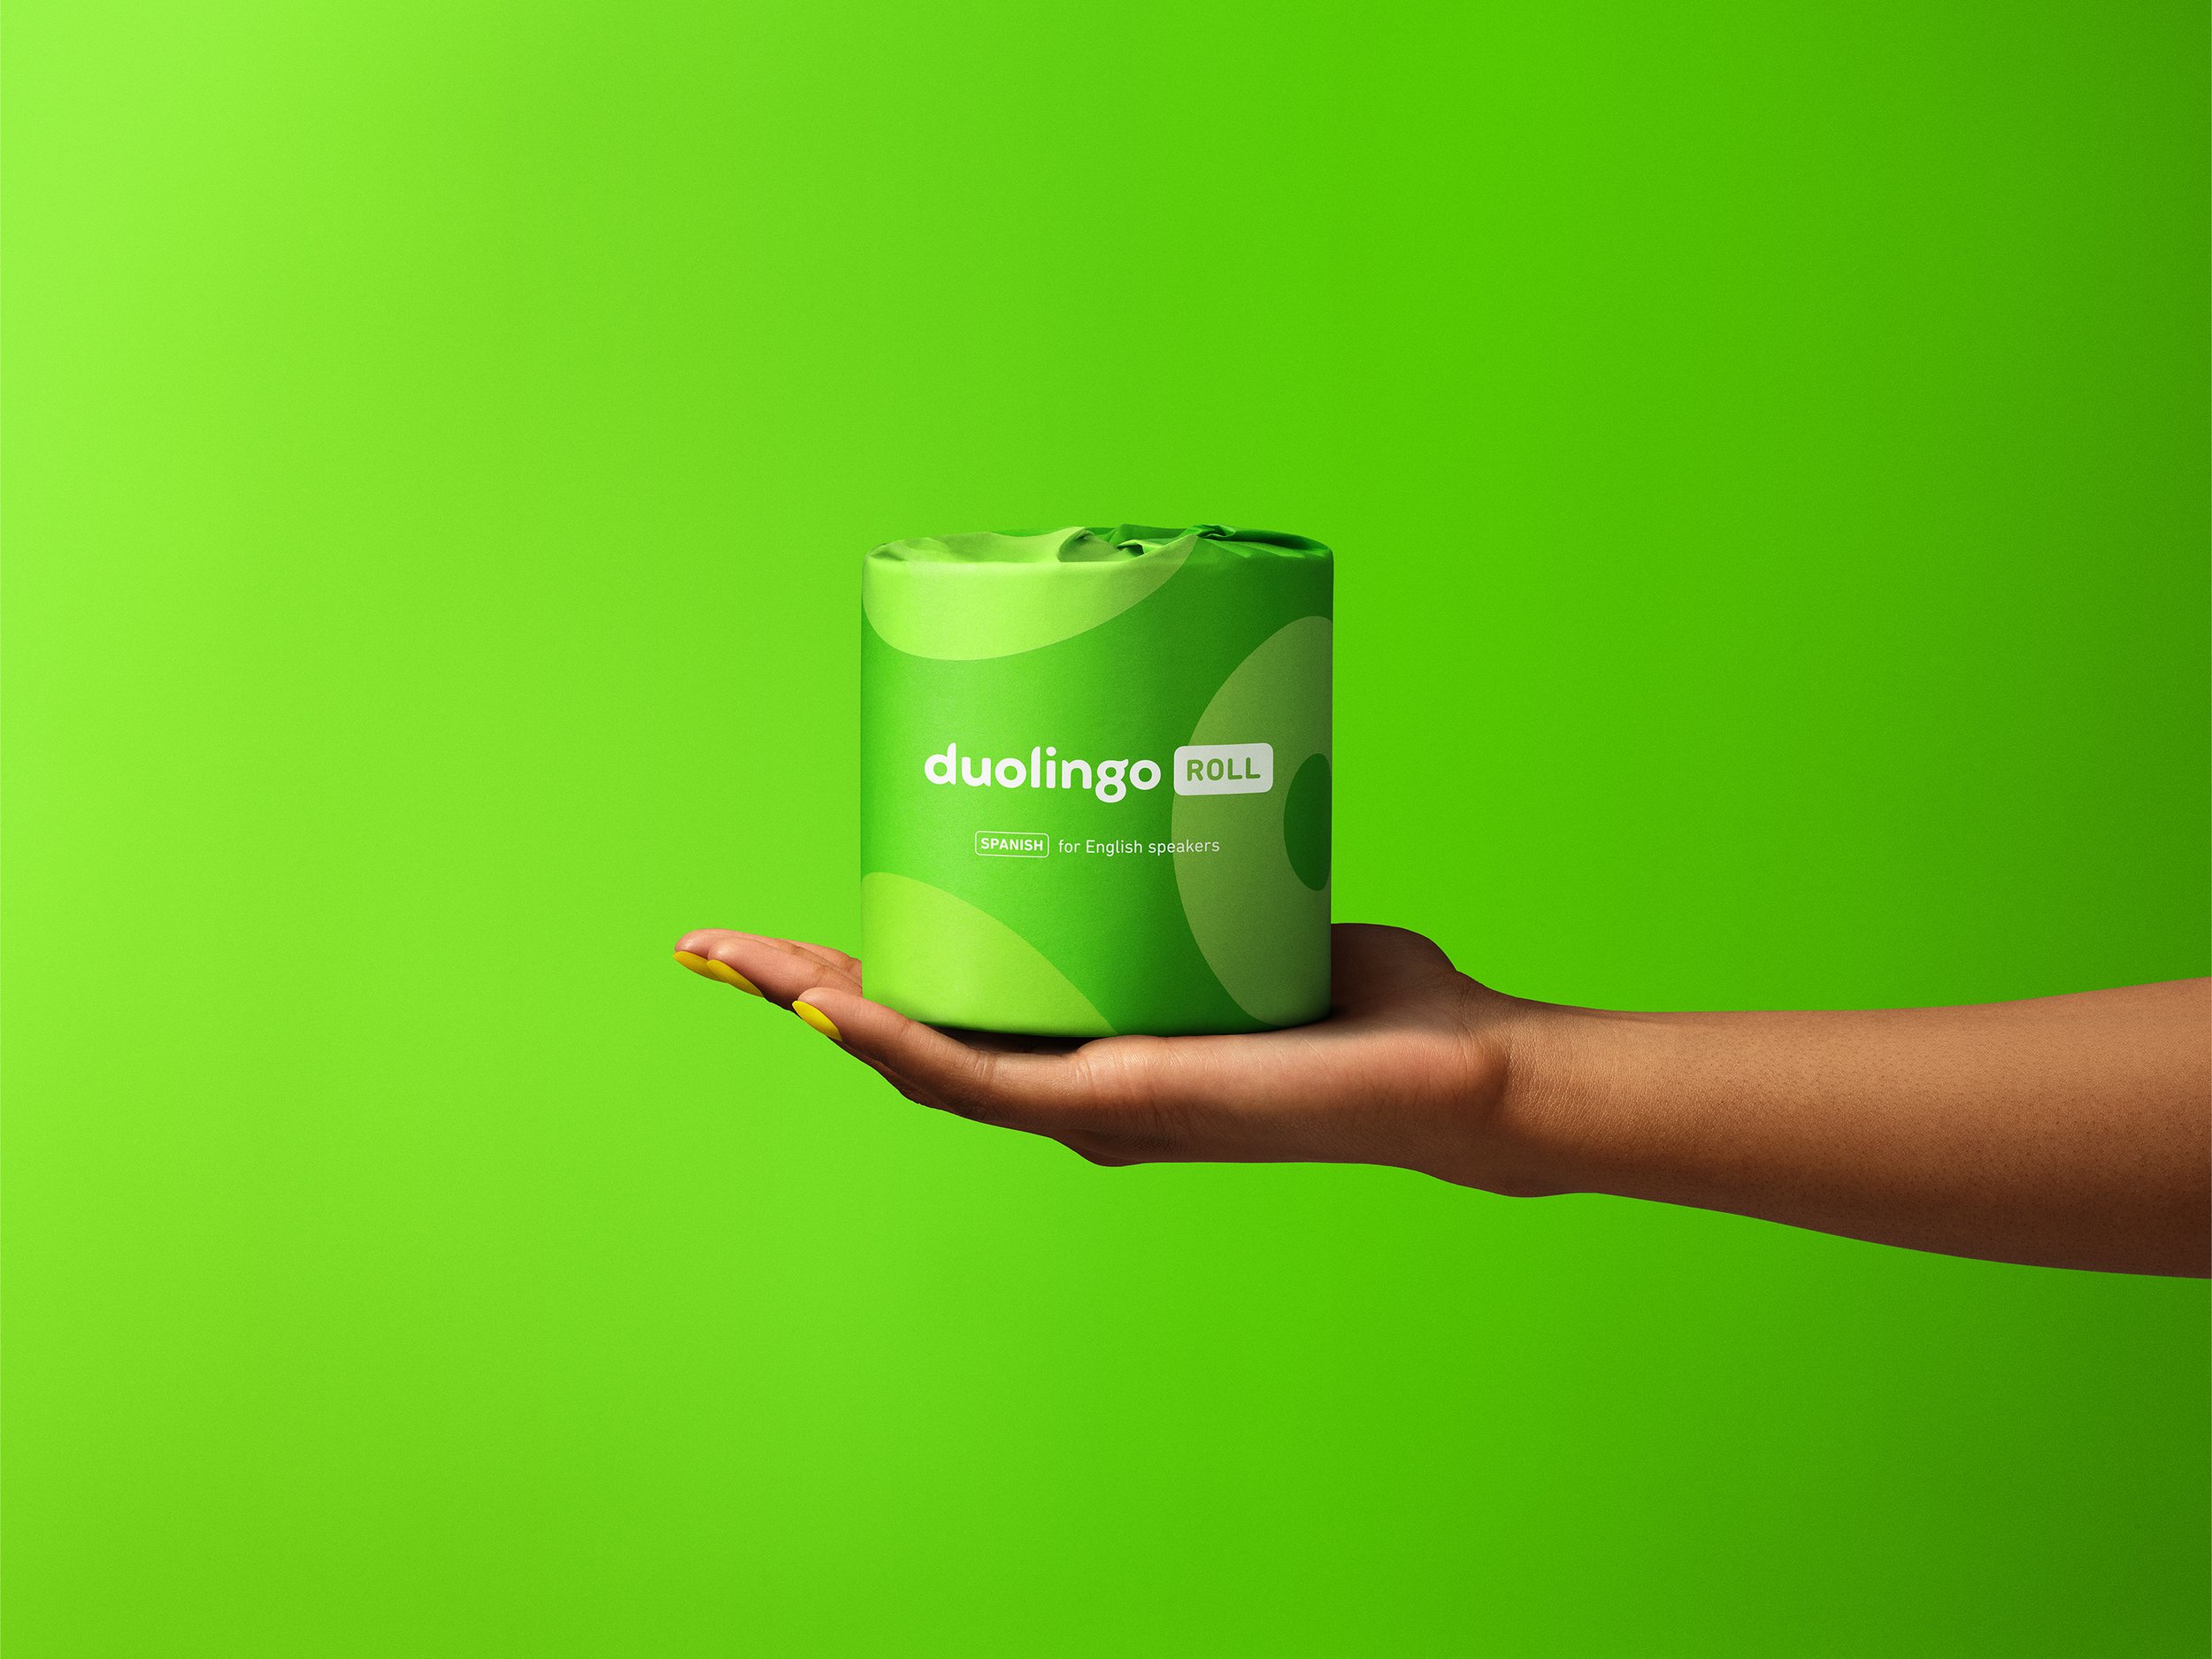 Duolingo_Roll_Hand-Green_Jack-Morgan-Design_3000x2250.jpeg